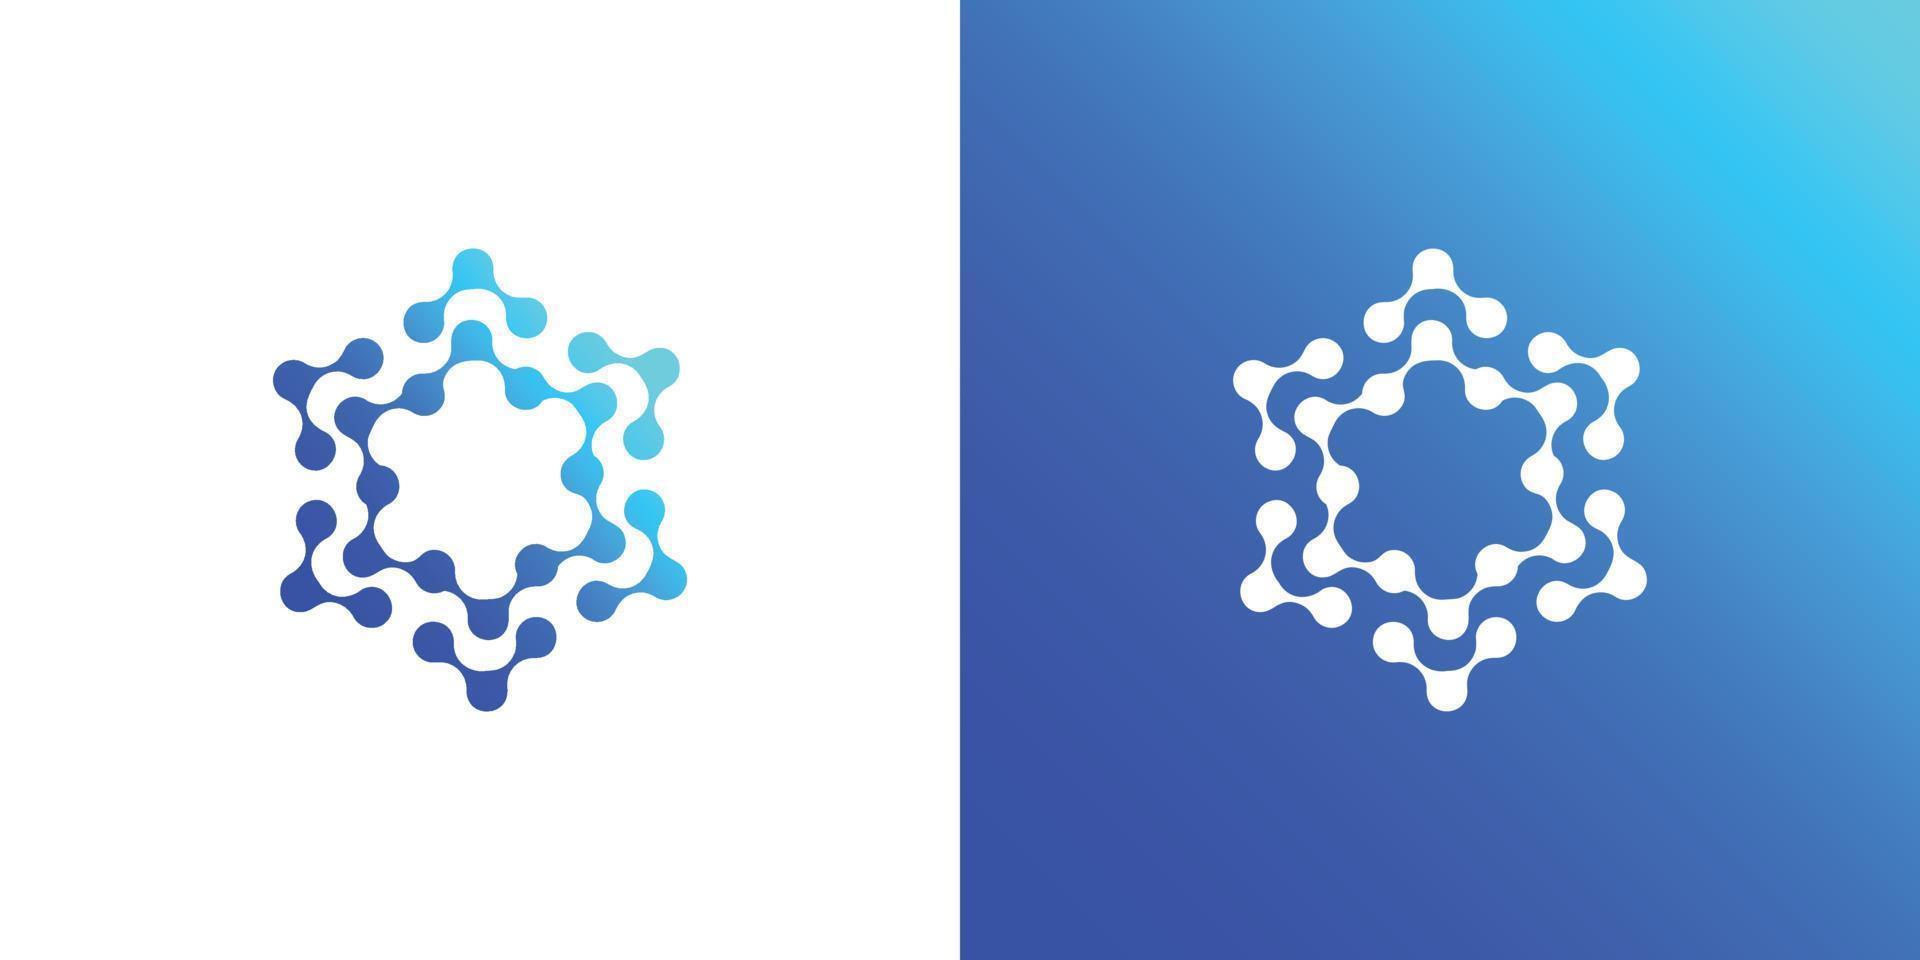 polígono tecnologia logotipo Projeto modelo em branco e azul fundo vetor